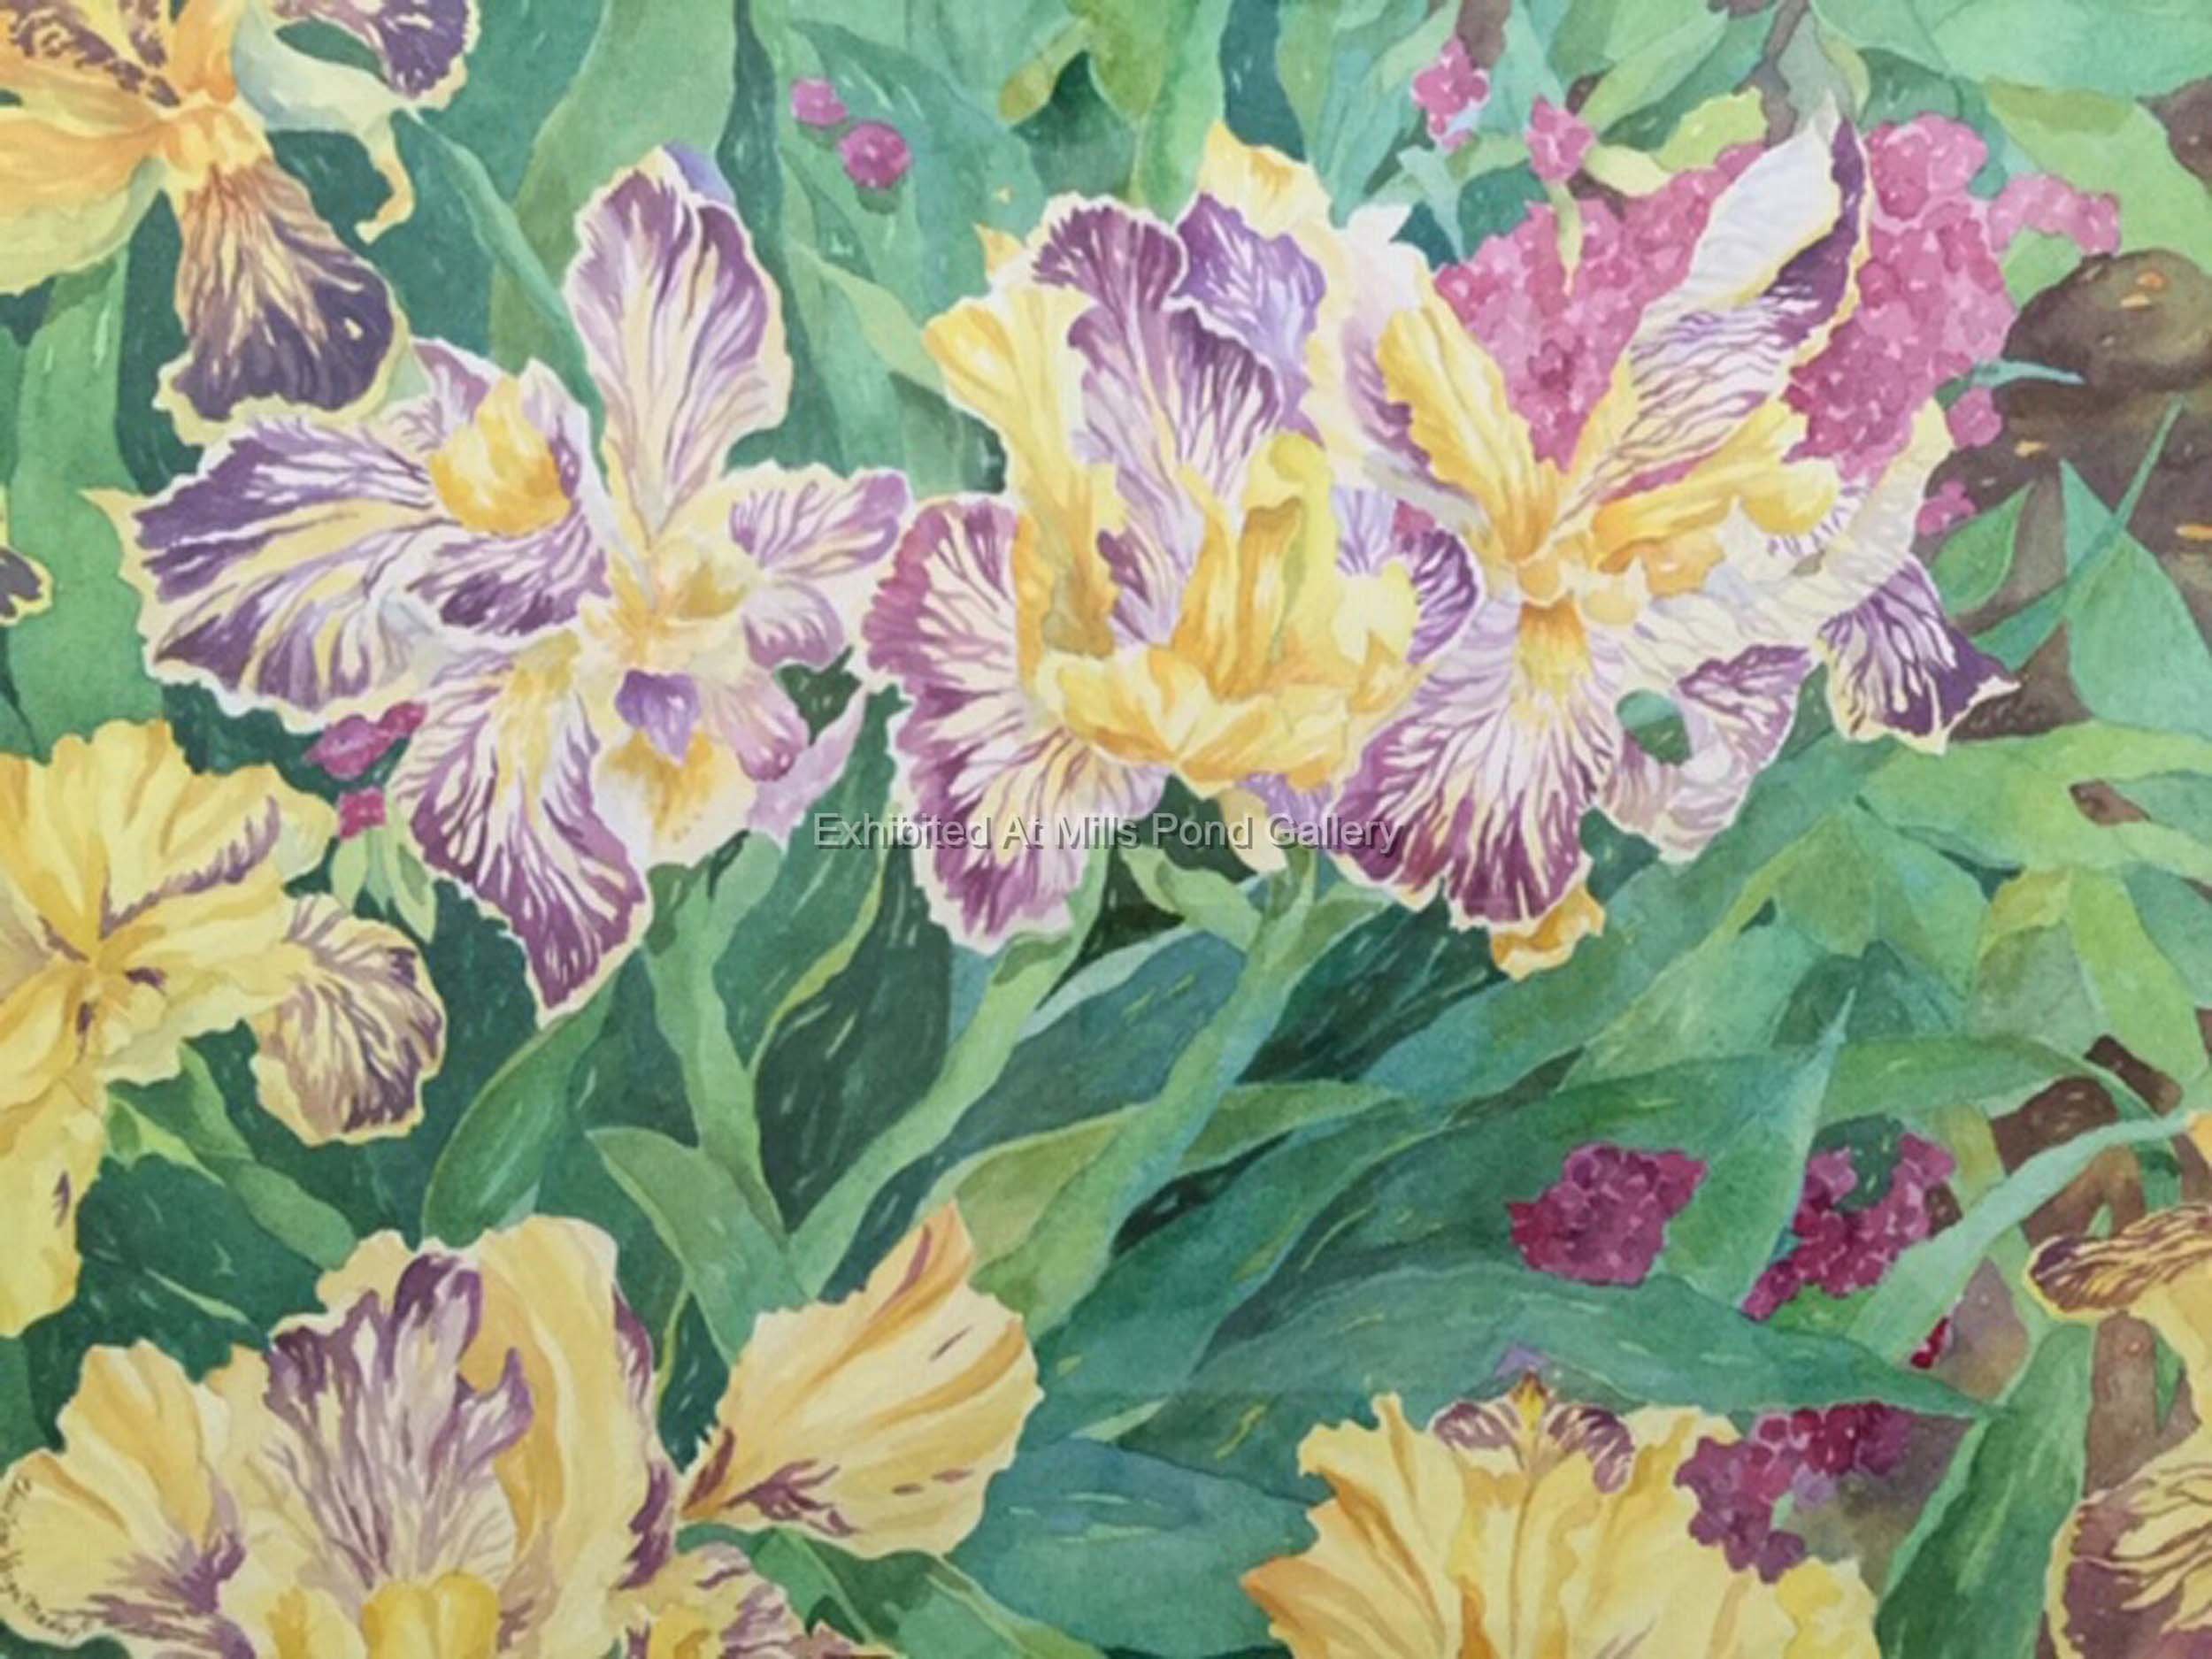 Christine Verga Maday-Heritage Irises-Watercolor on Paper.jpg